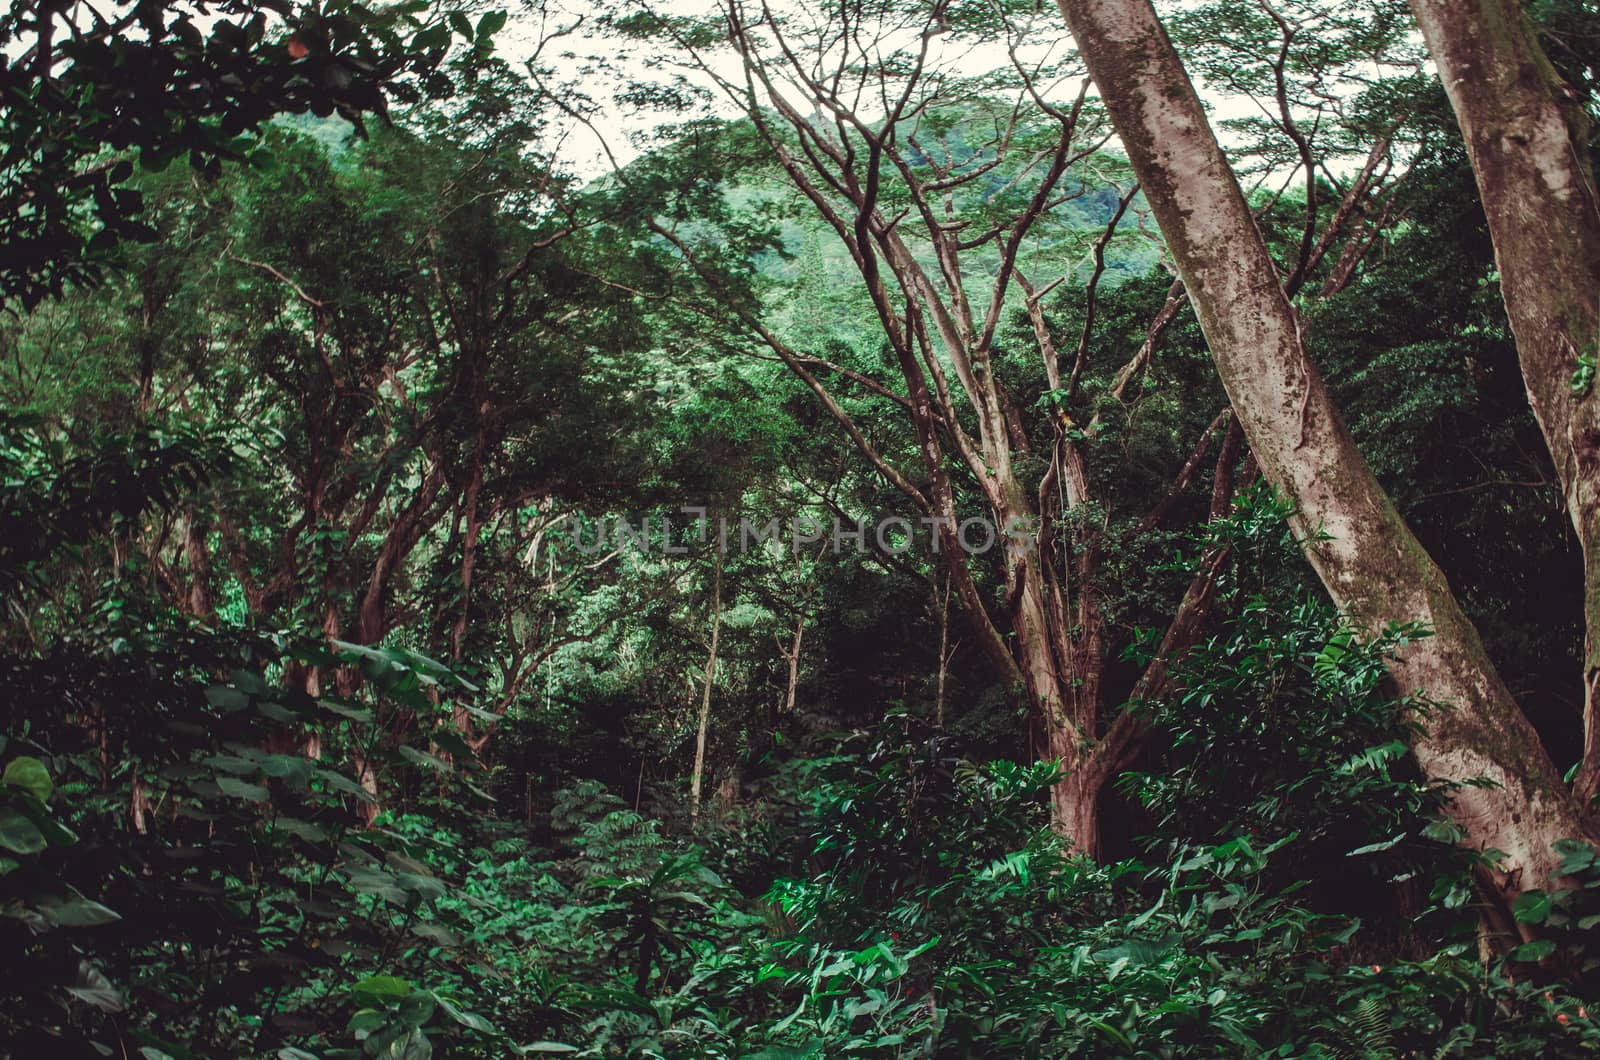 Rainforest vegetation and indigenous trees near Honolulu, US